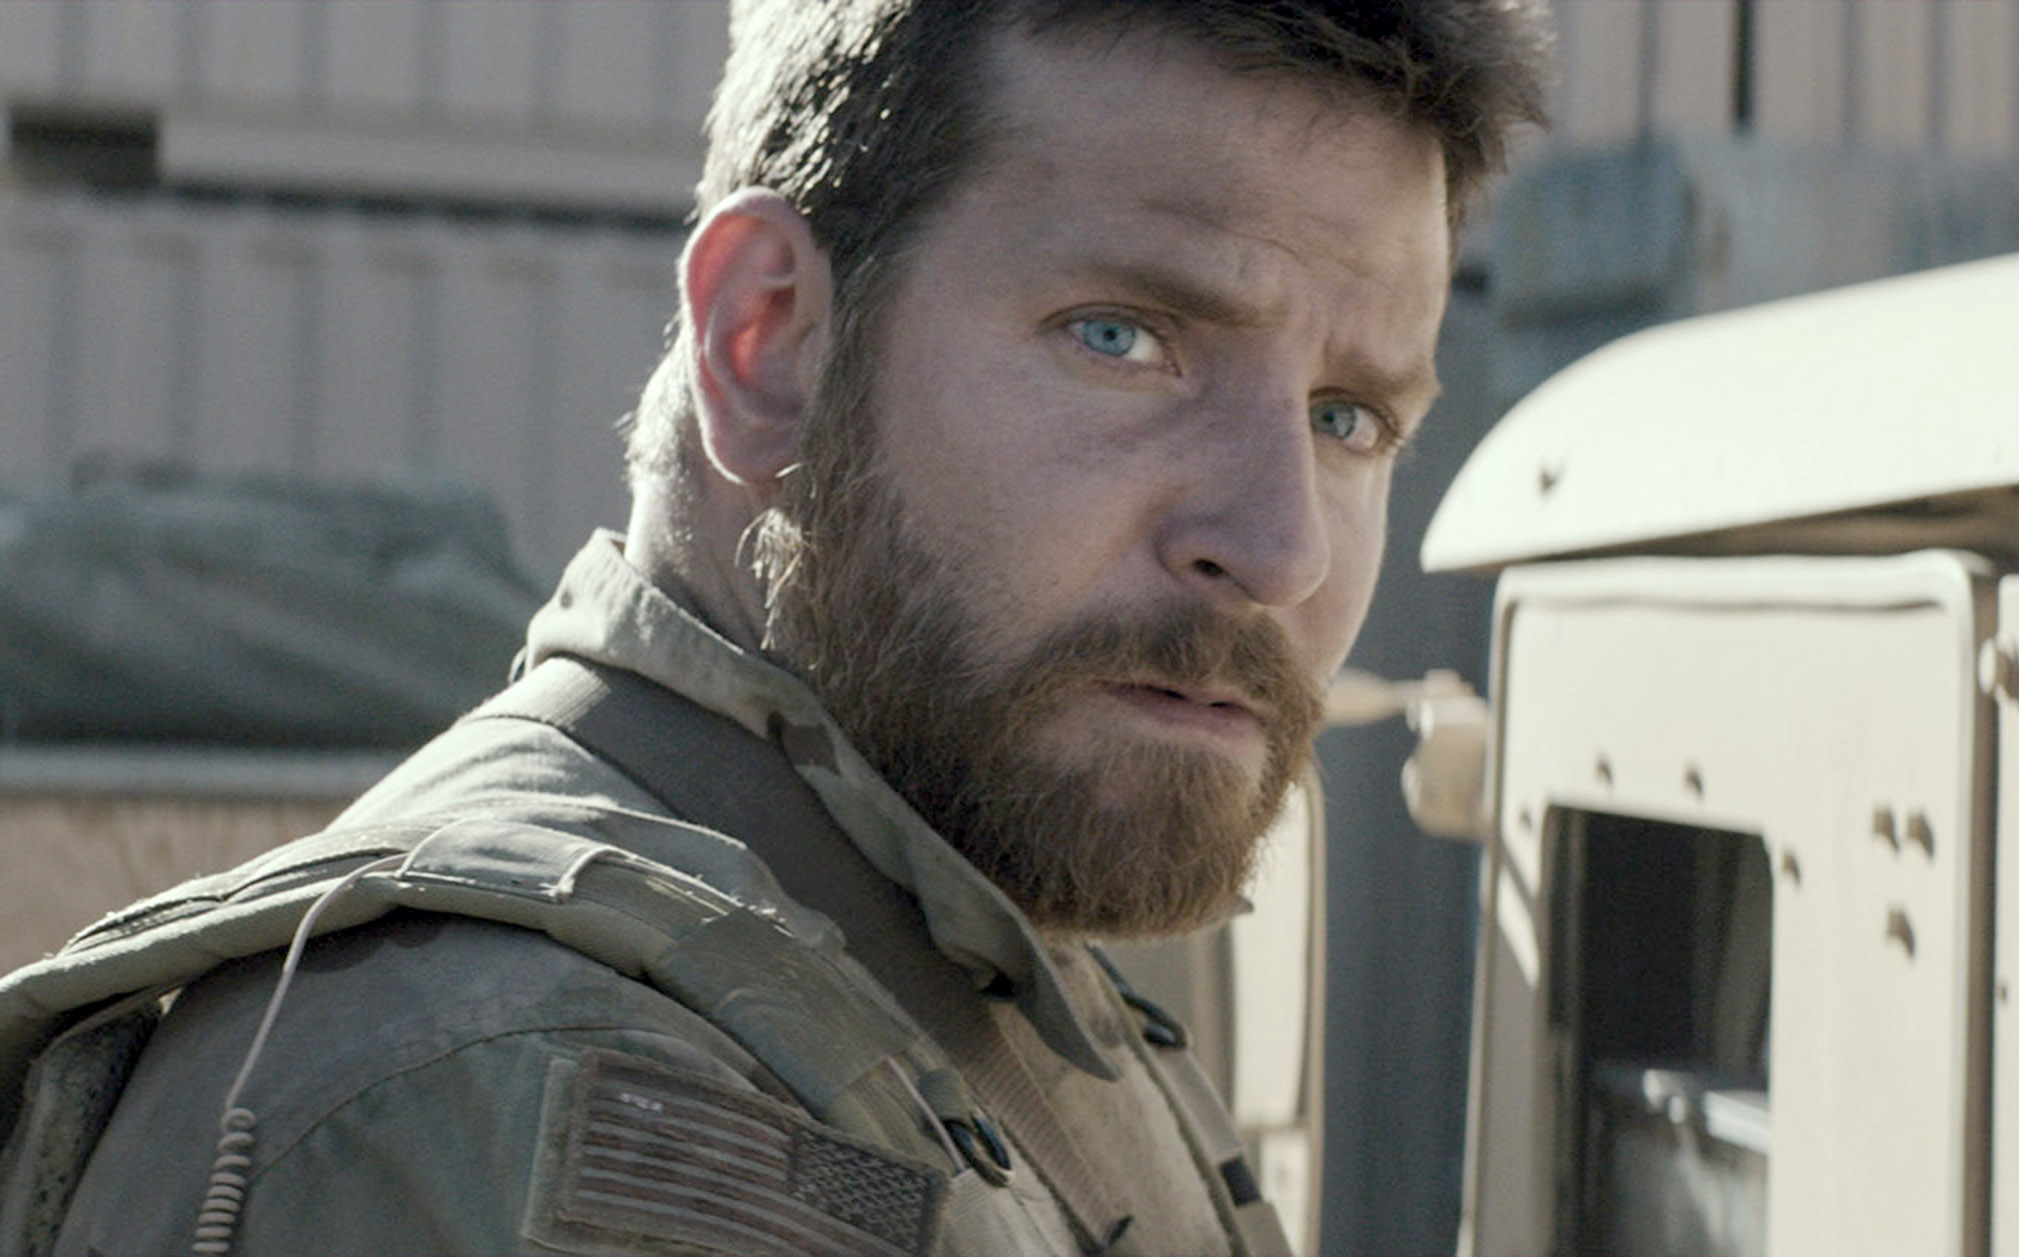 Bradley Cooper as Chris Kyle in “American Sniper.” Photo: Warner Bros. Pictures